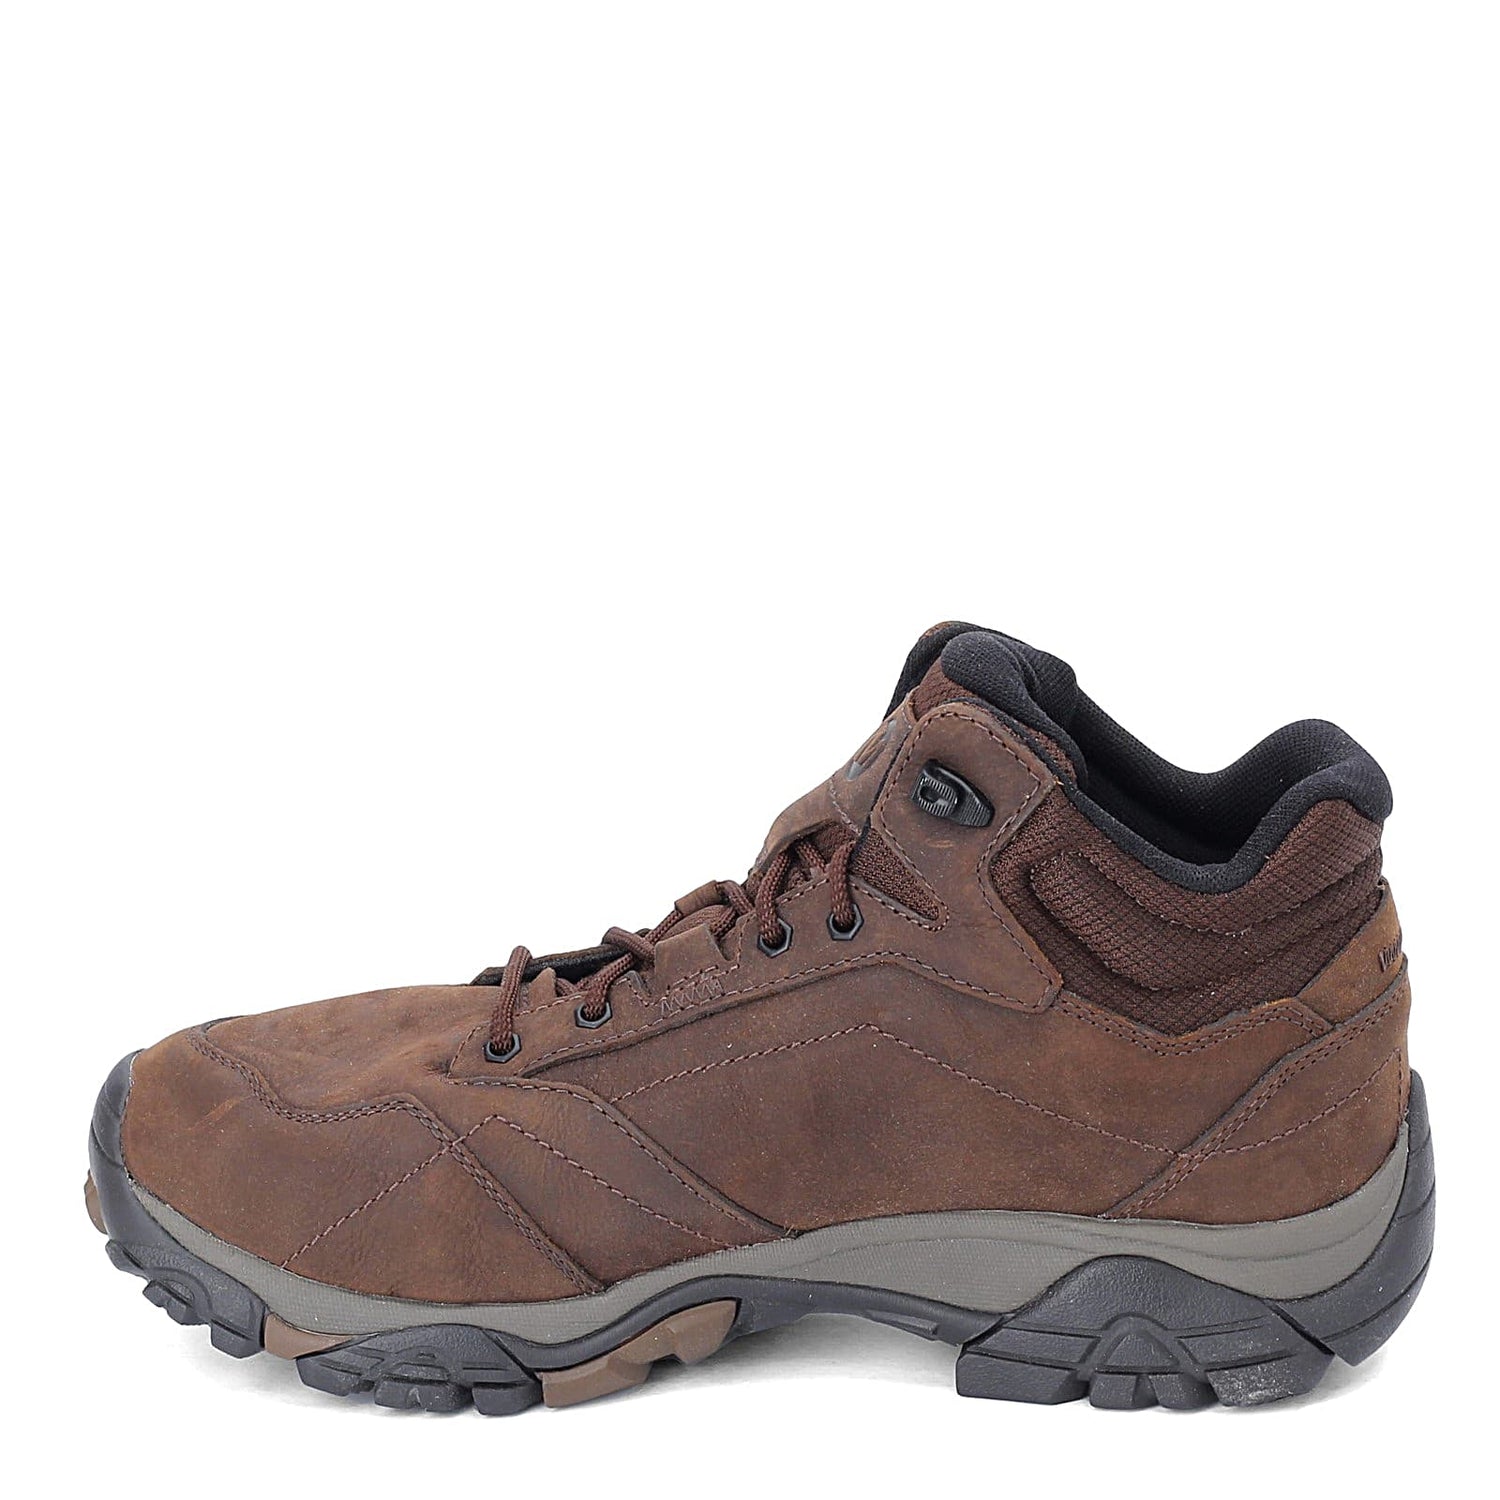 Peltz Shoes  Men's Merrell Moab Adventure Mid Waterproof Hiking Boots - Wide Width